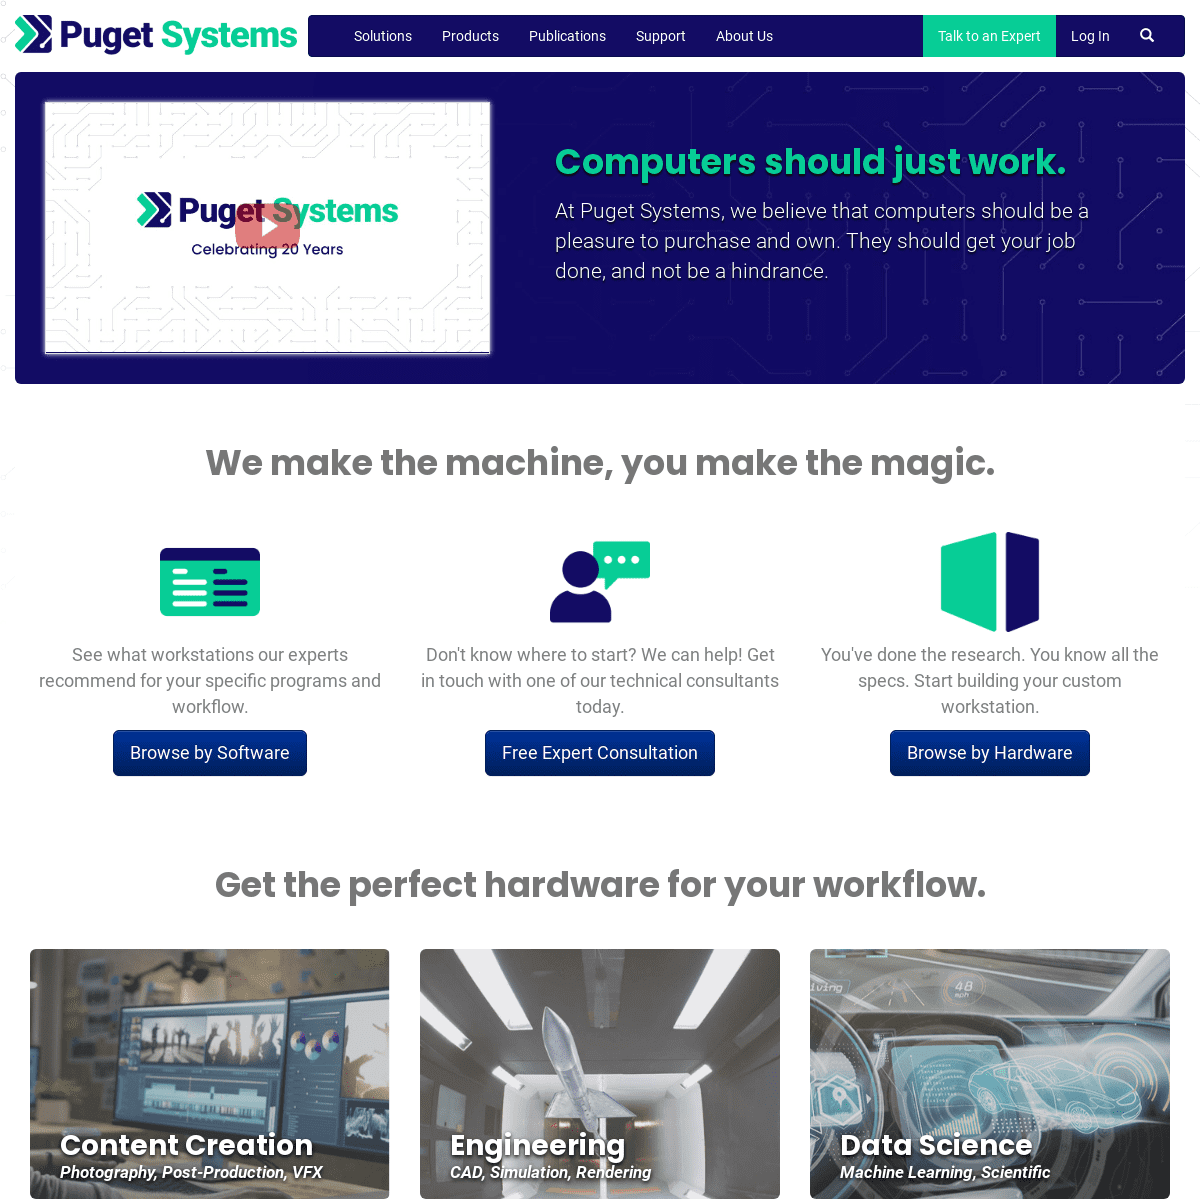 A complete backup of https://pugetsystems.com